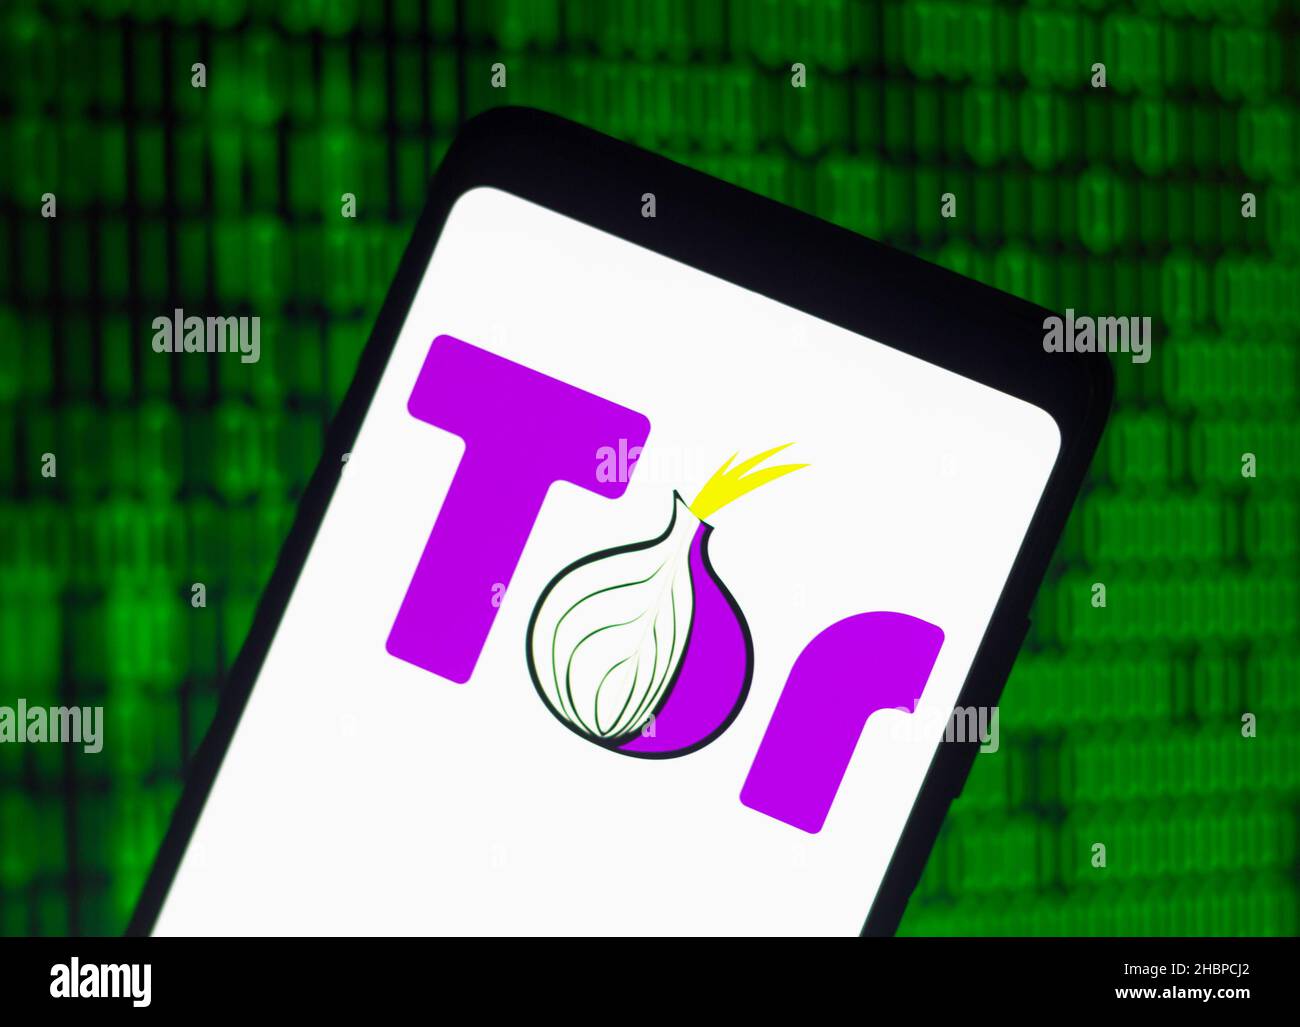 Tor browser image megaruzxpnew4af настроить работу браузера тор mega